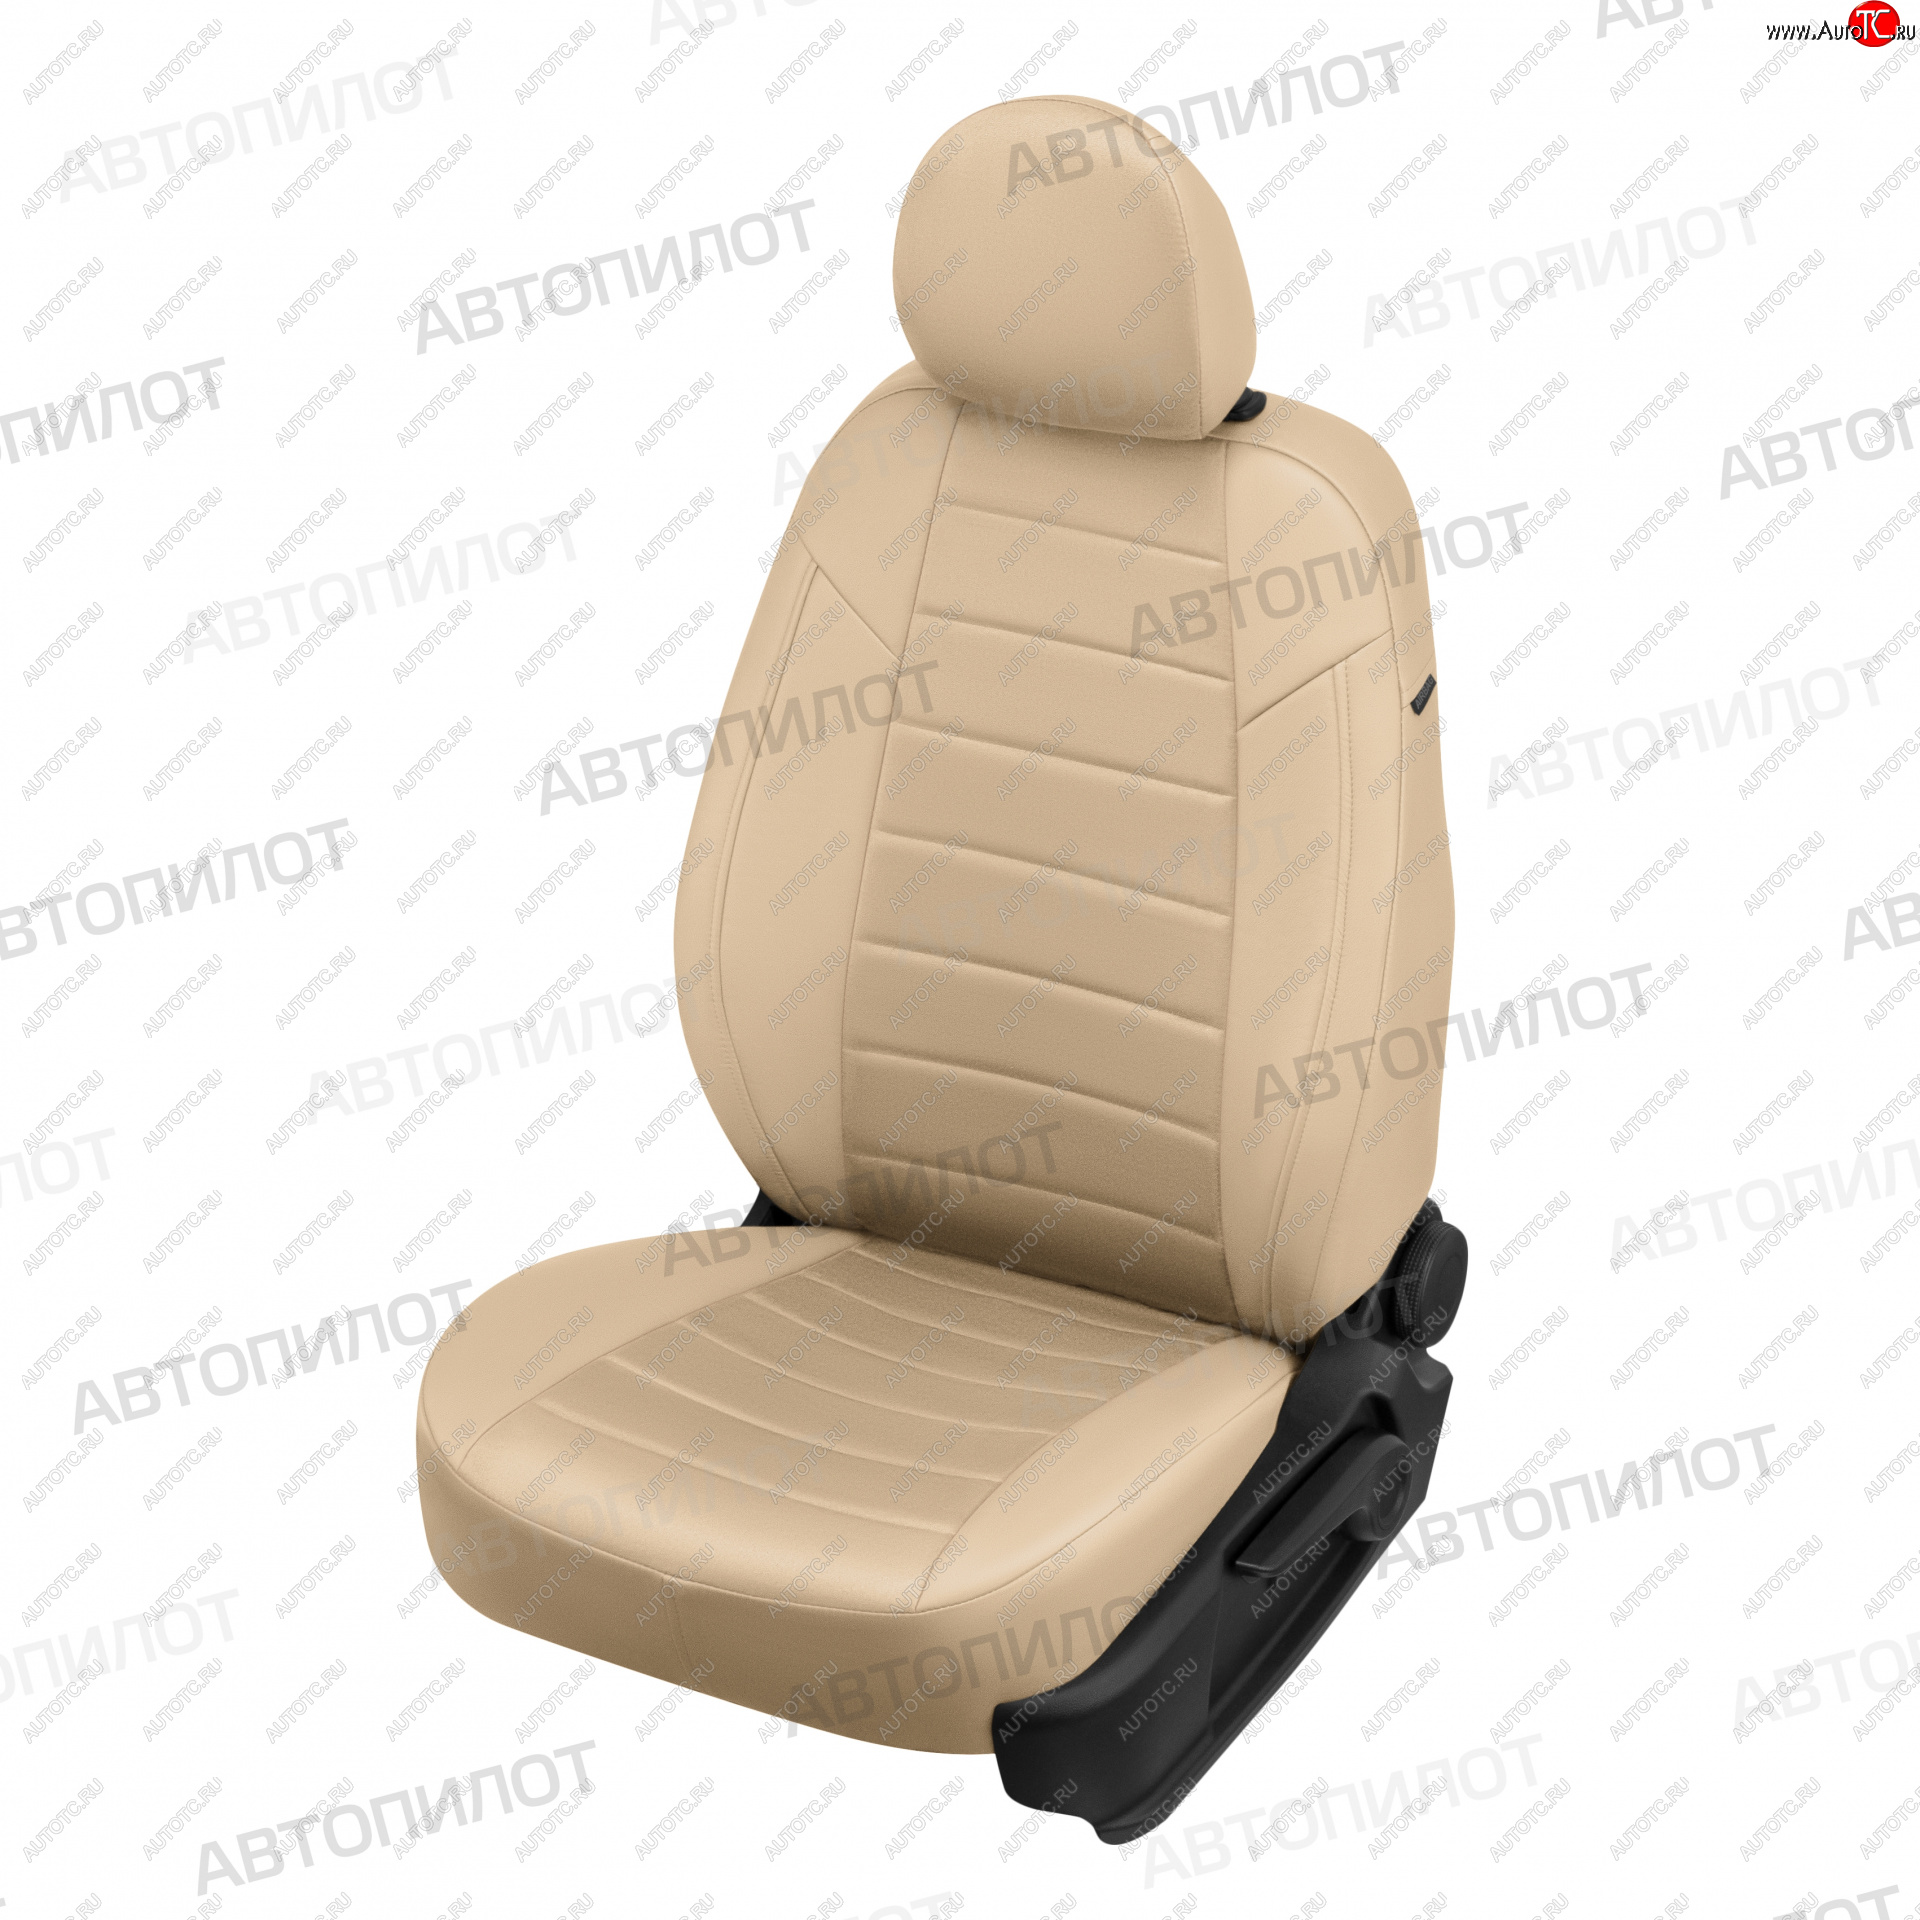 13 849 р. Чехлы сидений (Titanium, экокожа/алькантара) Автопилот Ford Mondeo MK5 CD391 дорестайлинг седан (2014-2018) (бежевый)